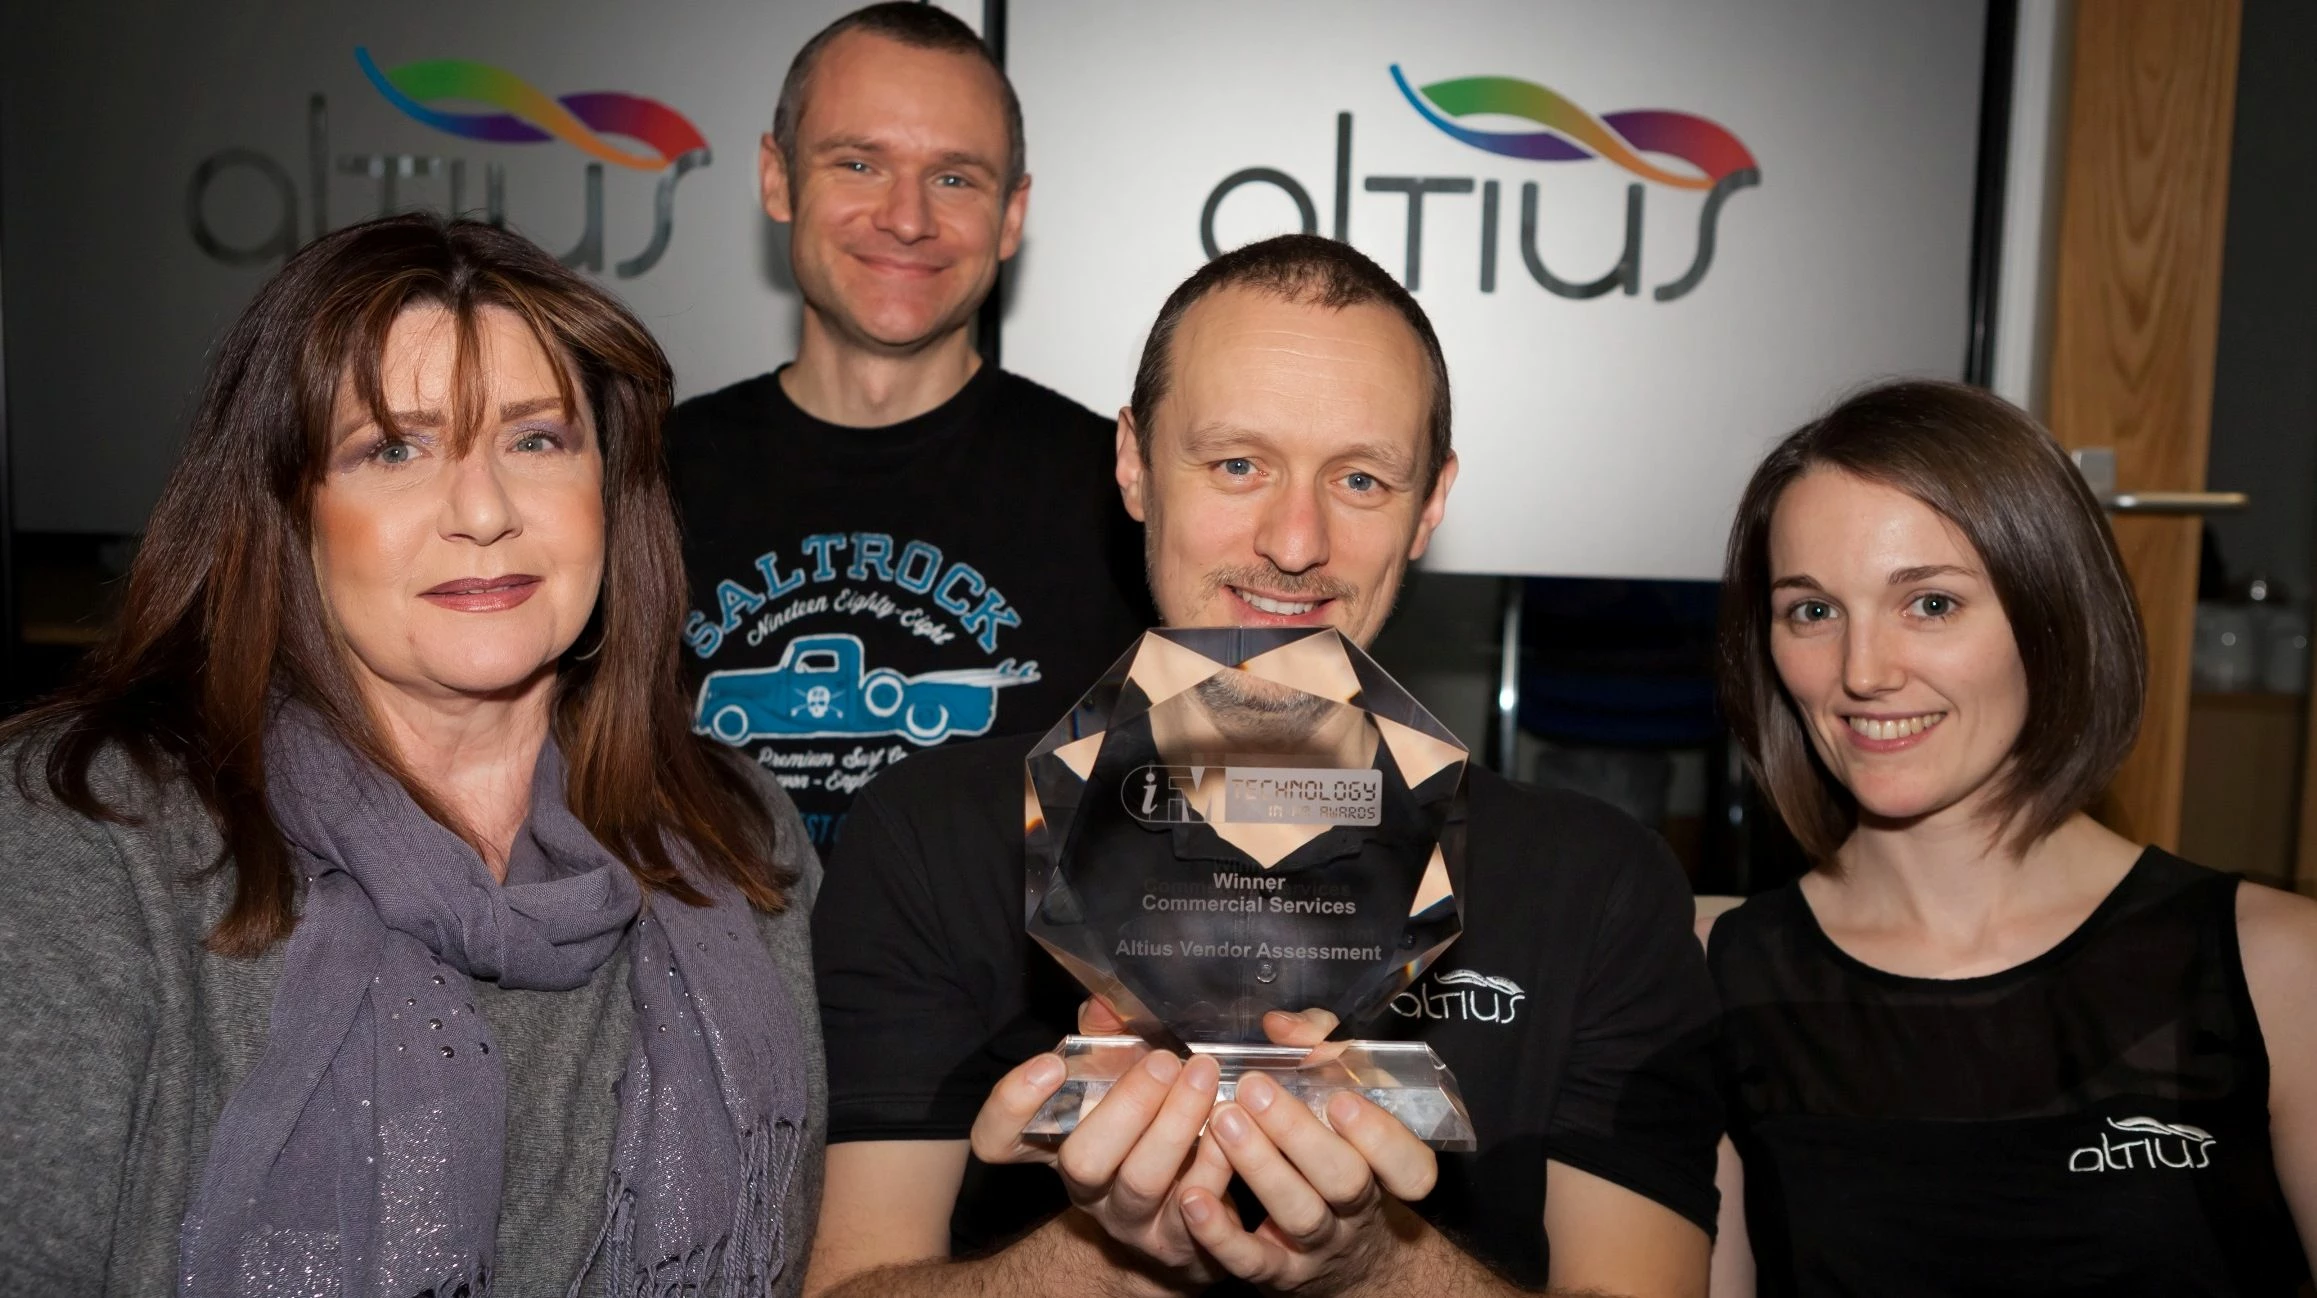 Members of the Altius team celebrate award success. Pictured (l-r) Sally Peberday, Neal Chamen, Len 